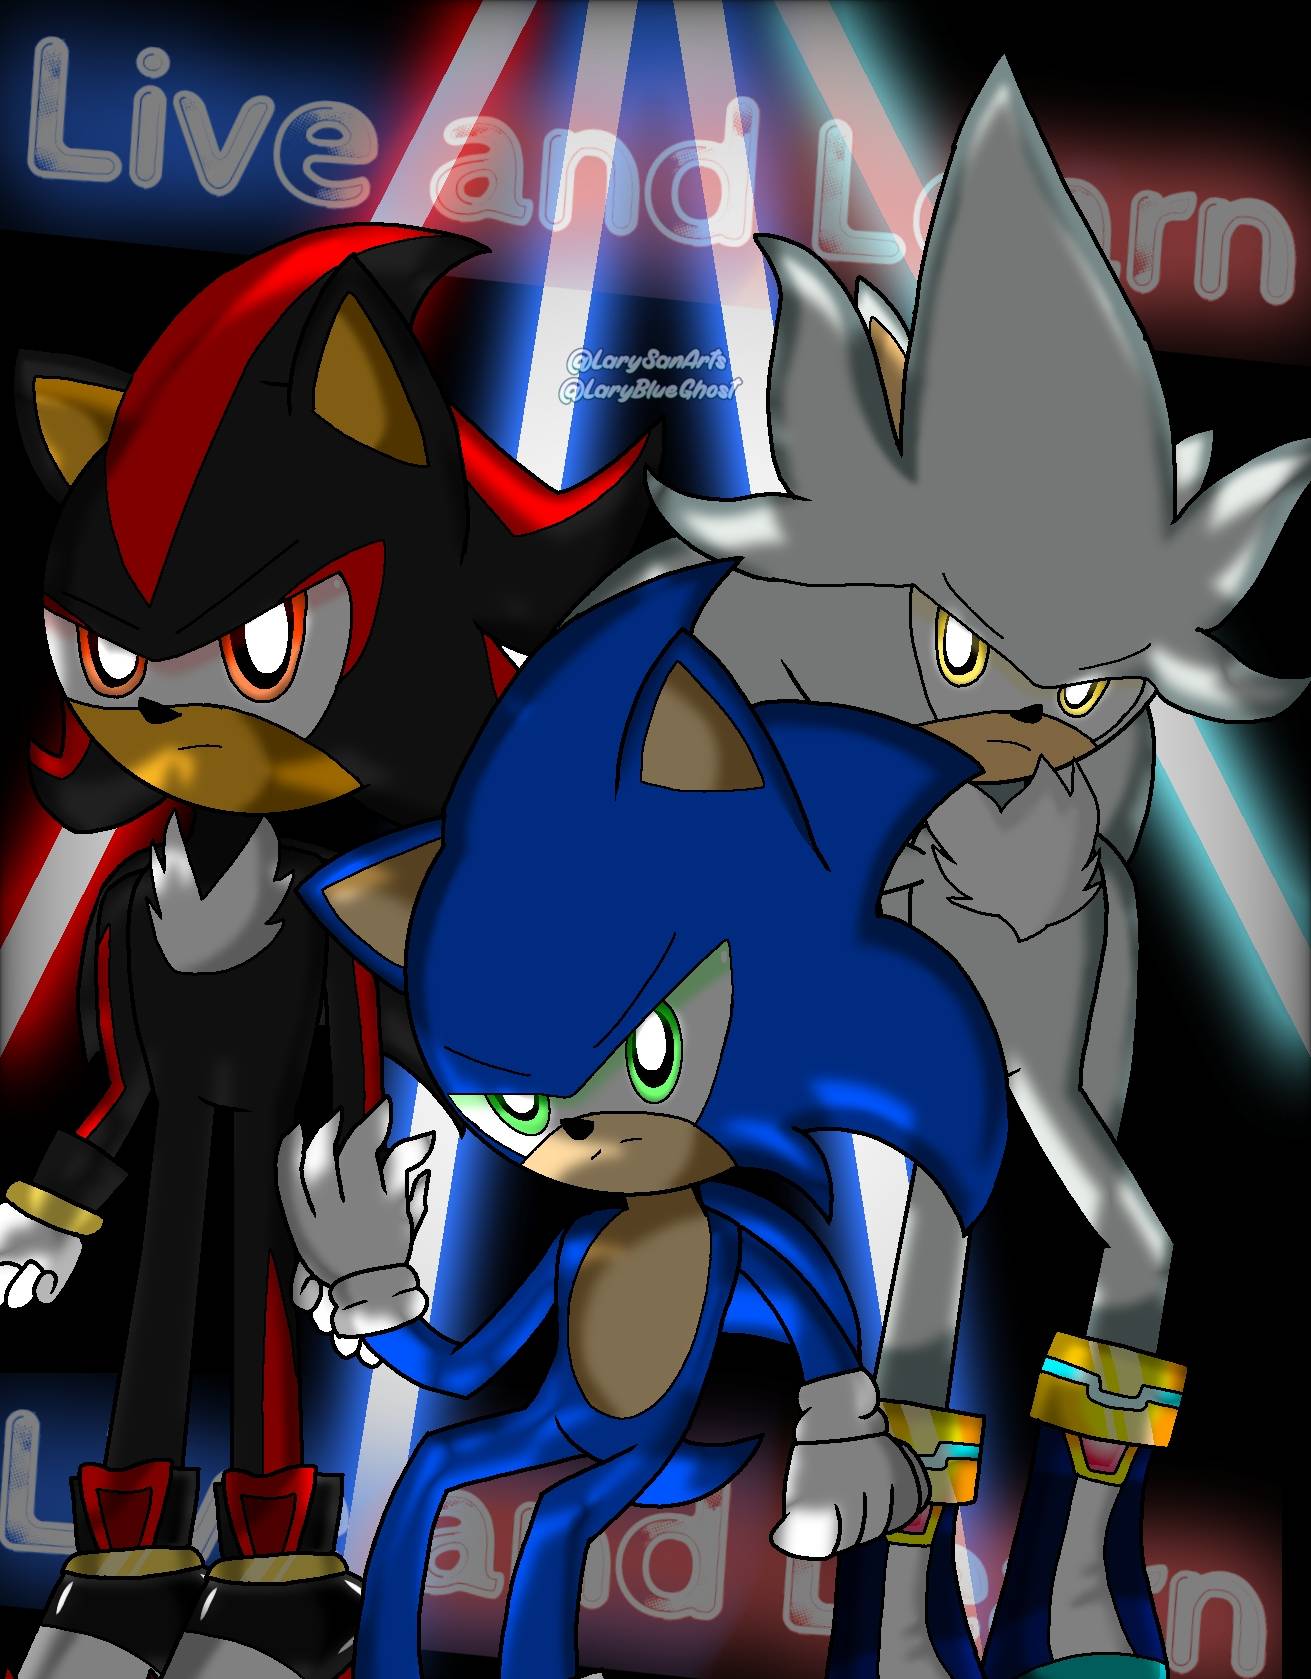 Sonic Shadow and Silver by xXYumiAsukaXx on DeviantArt